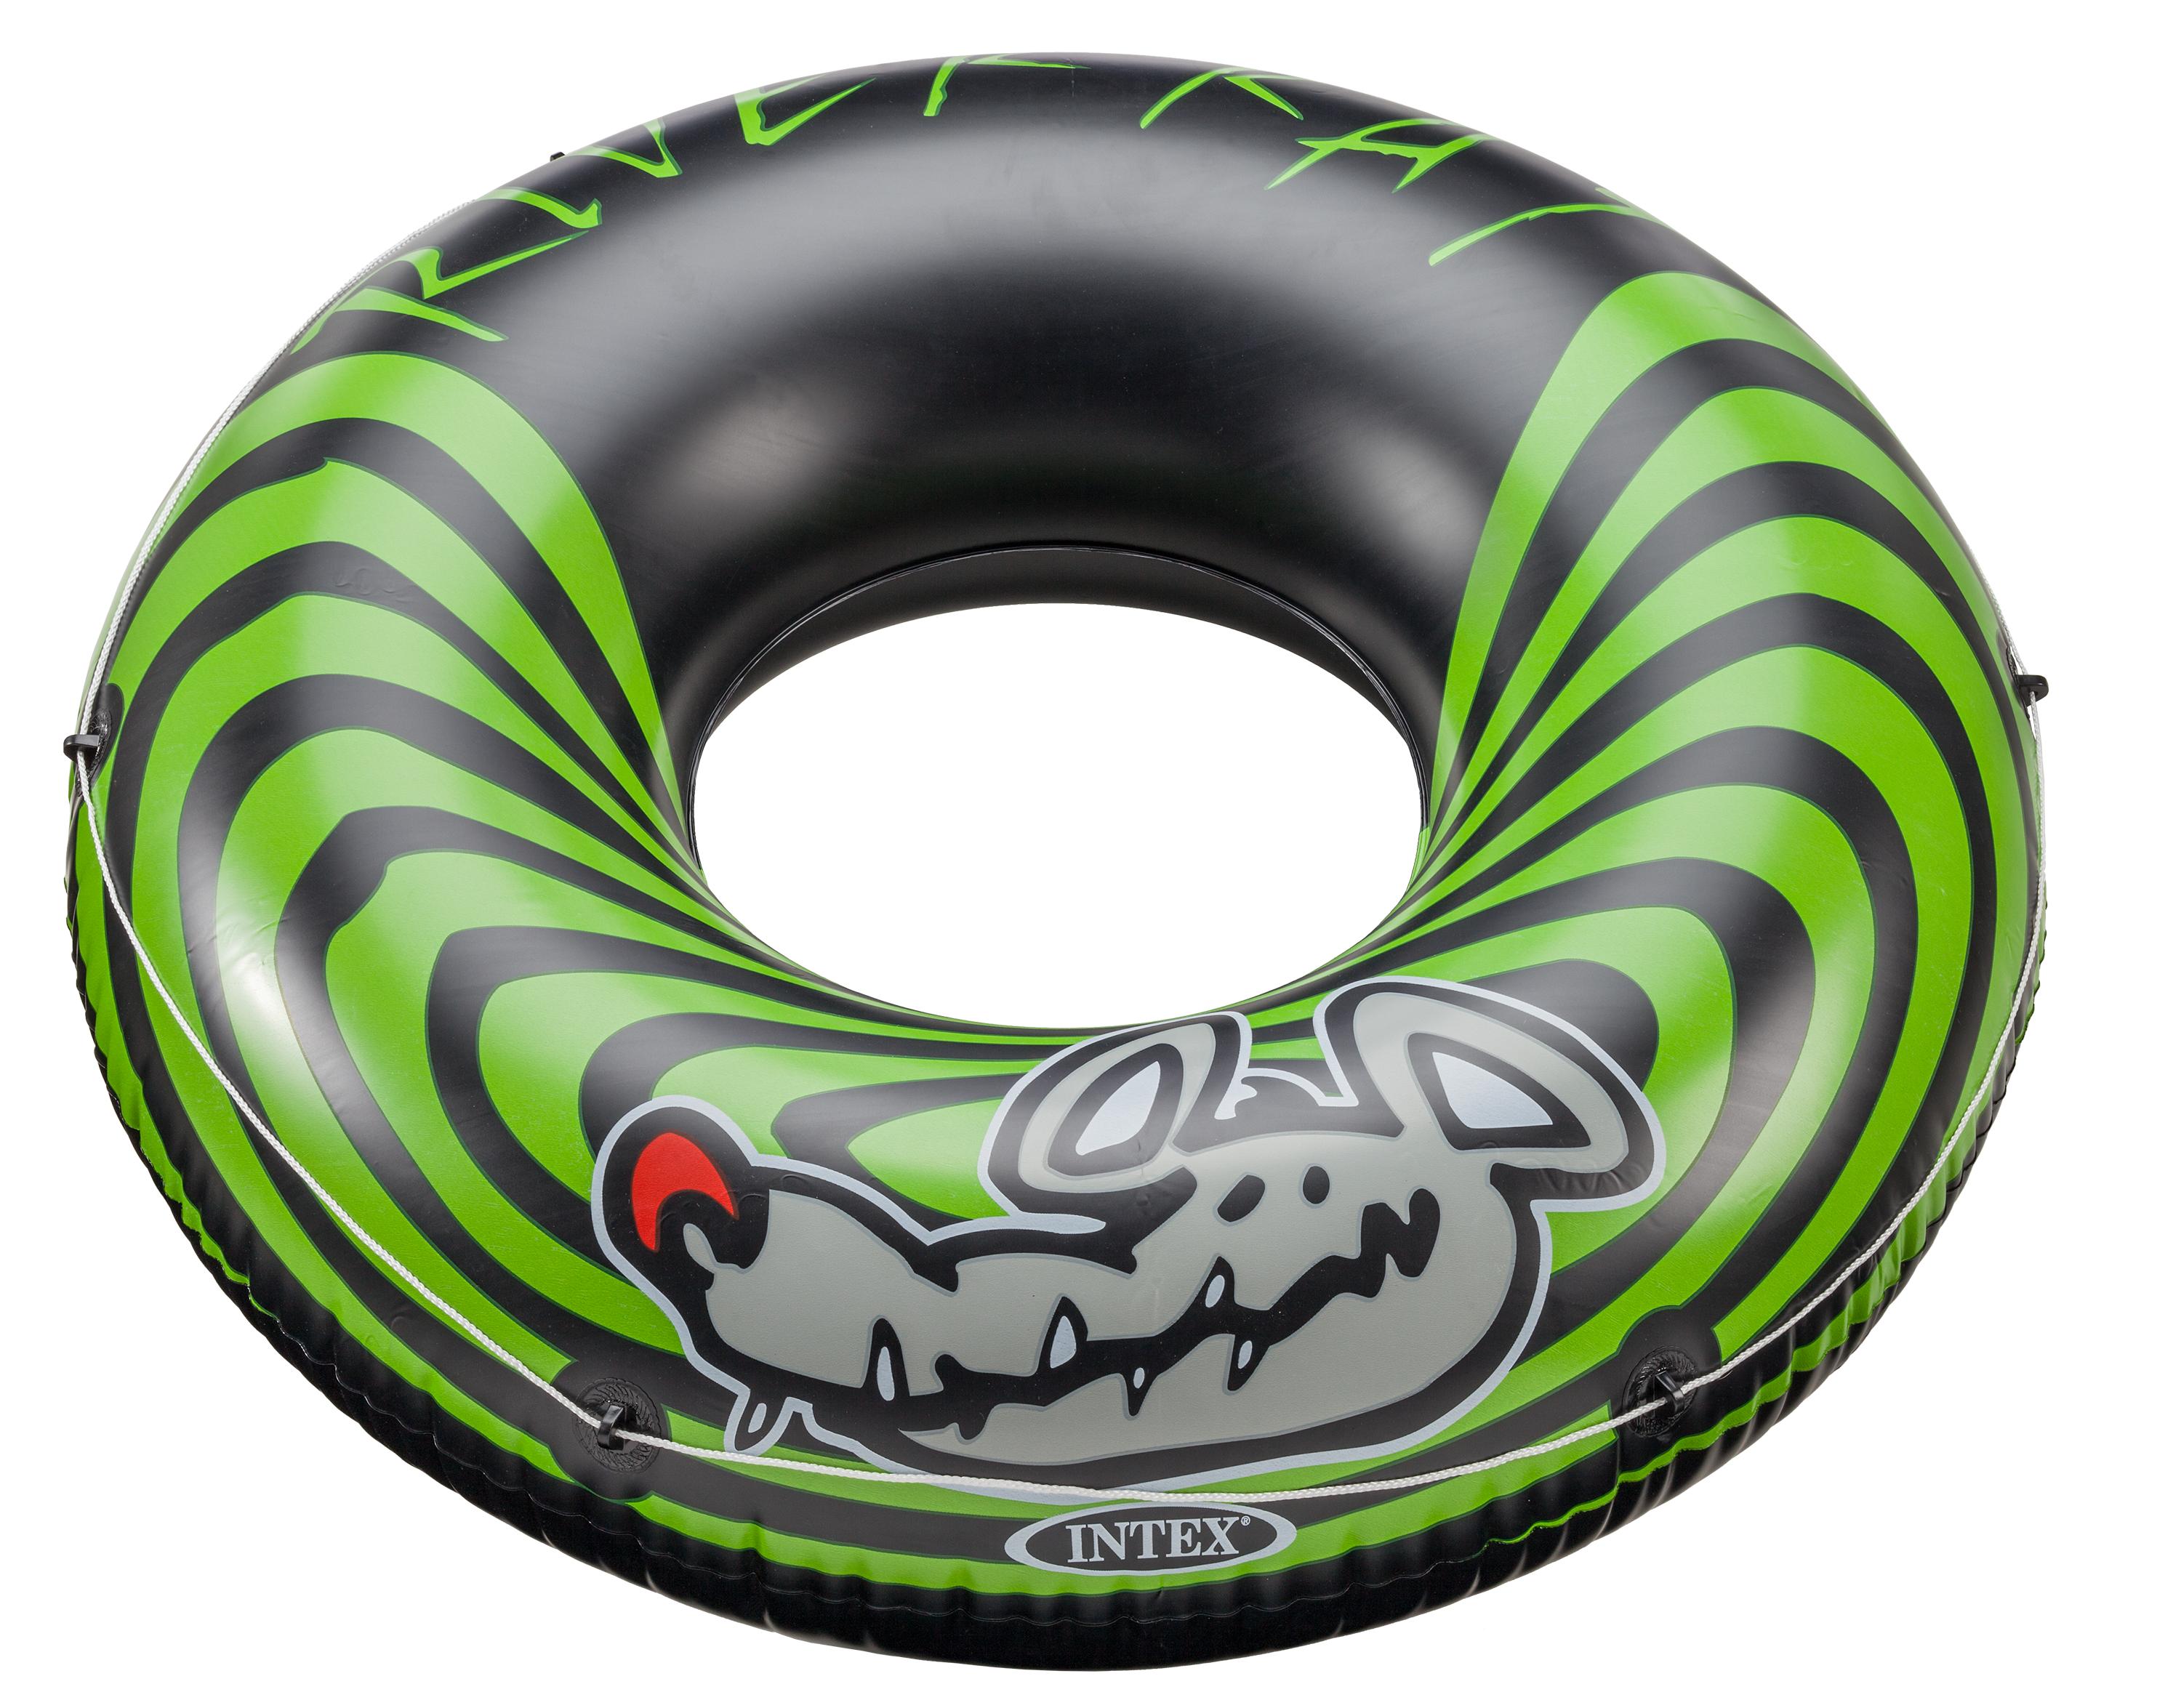 Intex River Rat Inflatable 48 Lake Floating Tube Green Sealed